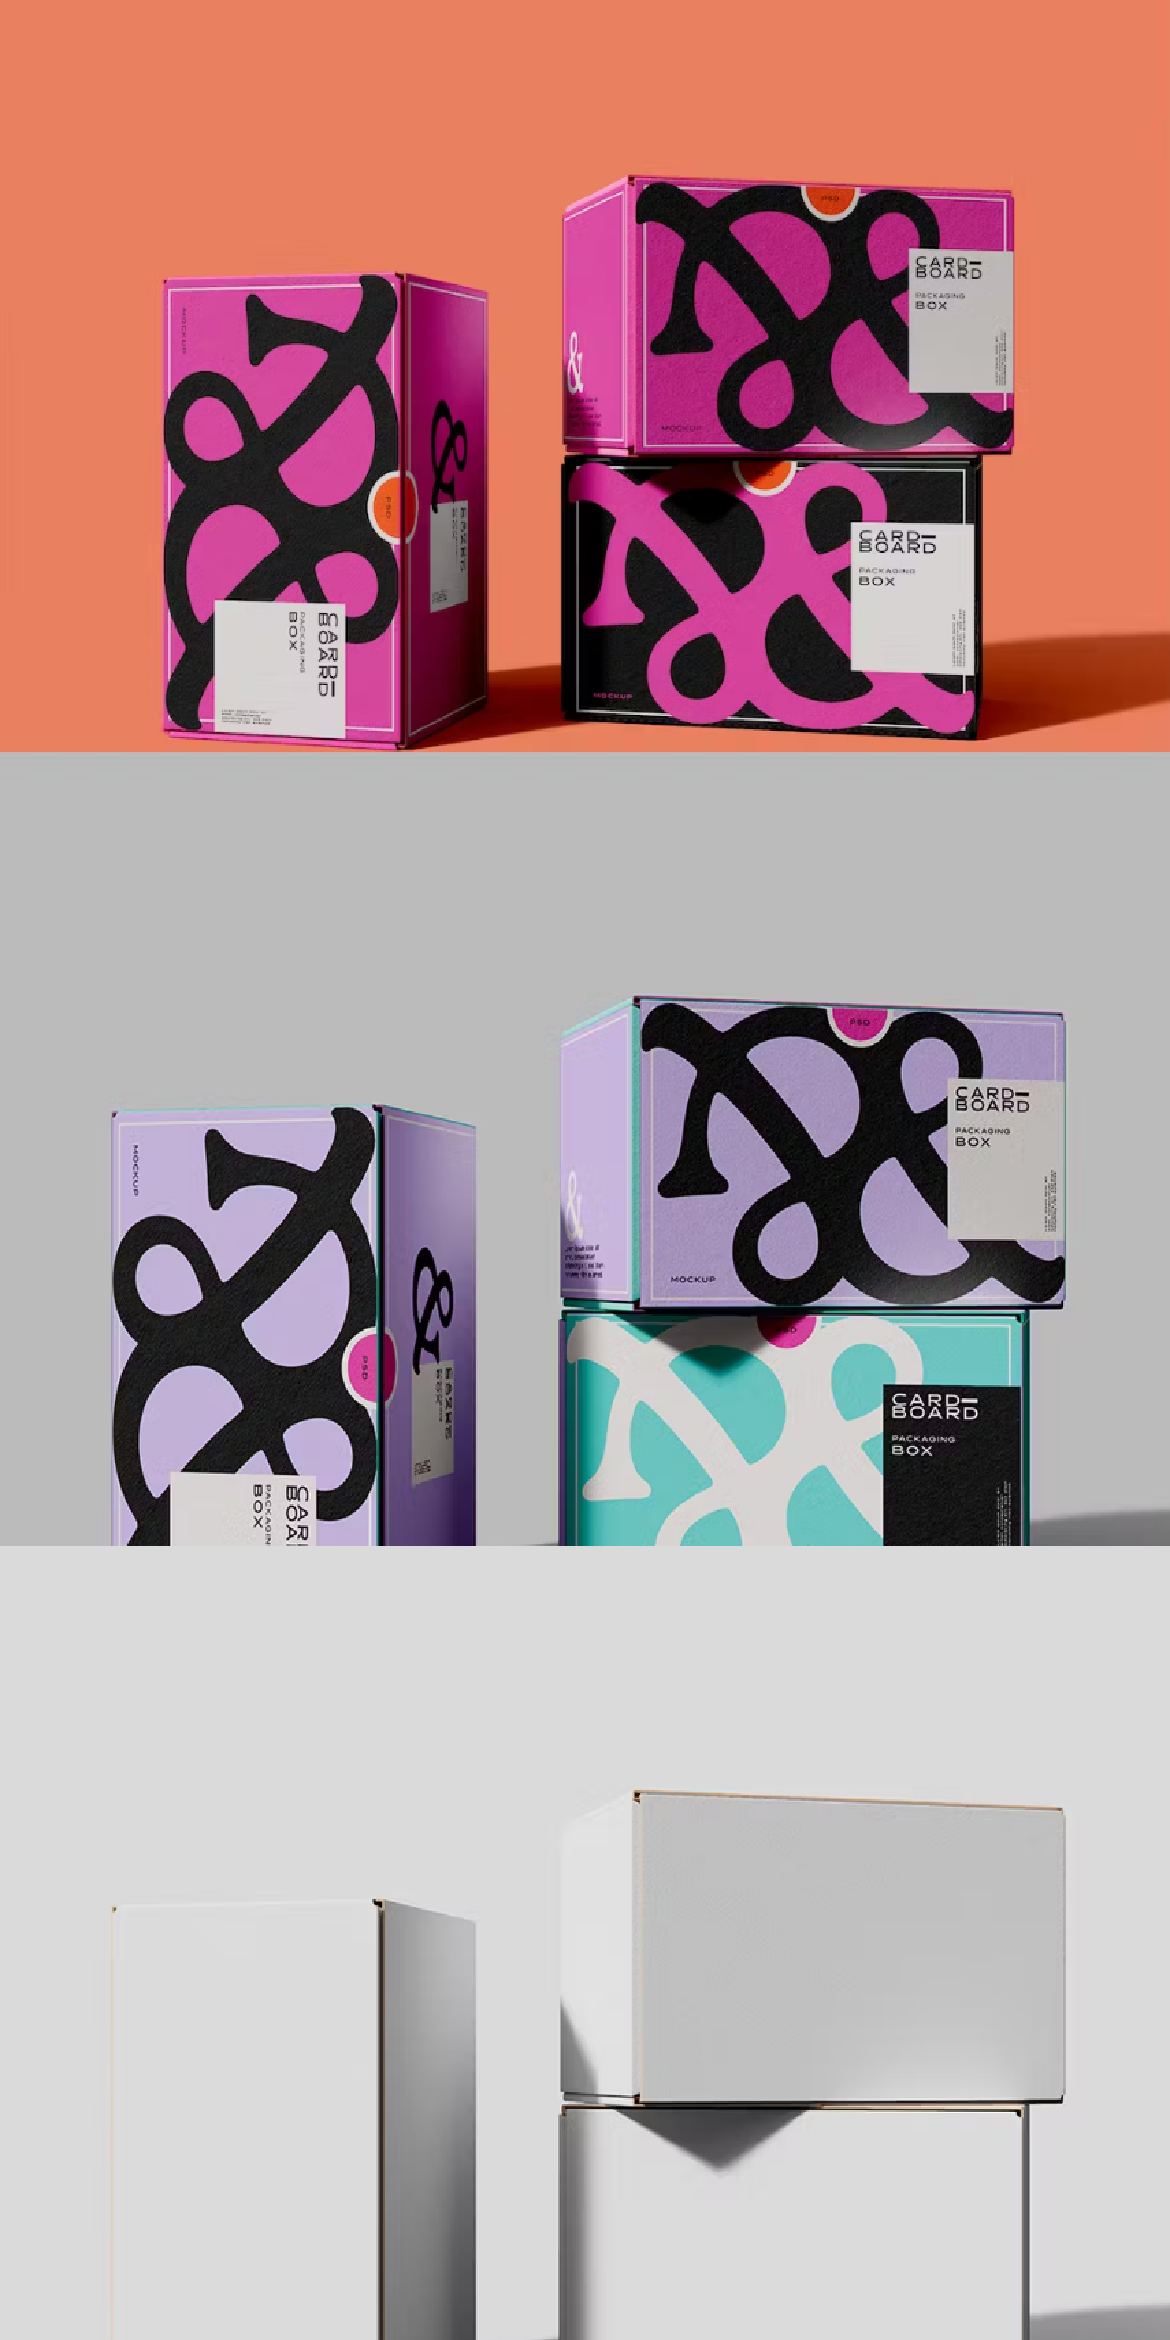 Packaging packaging design package package design  Mockup template cardboard cardbox shipping box